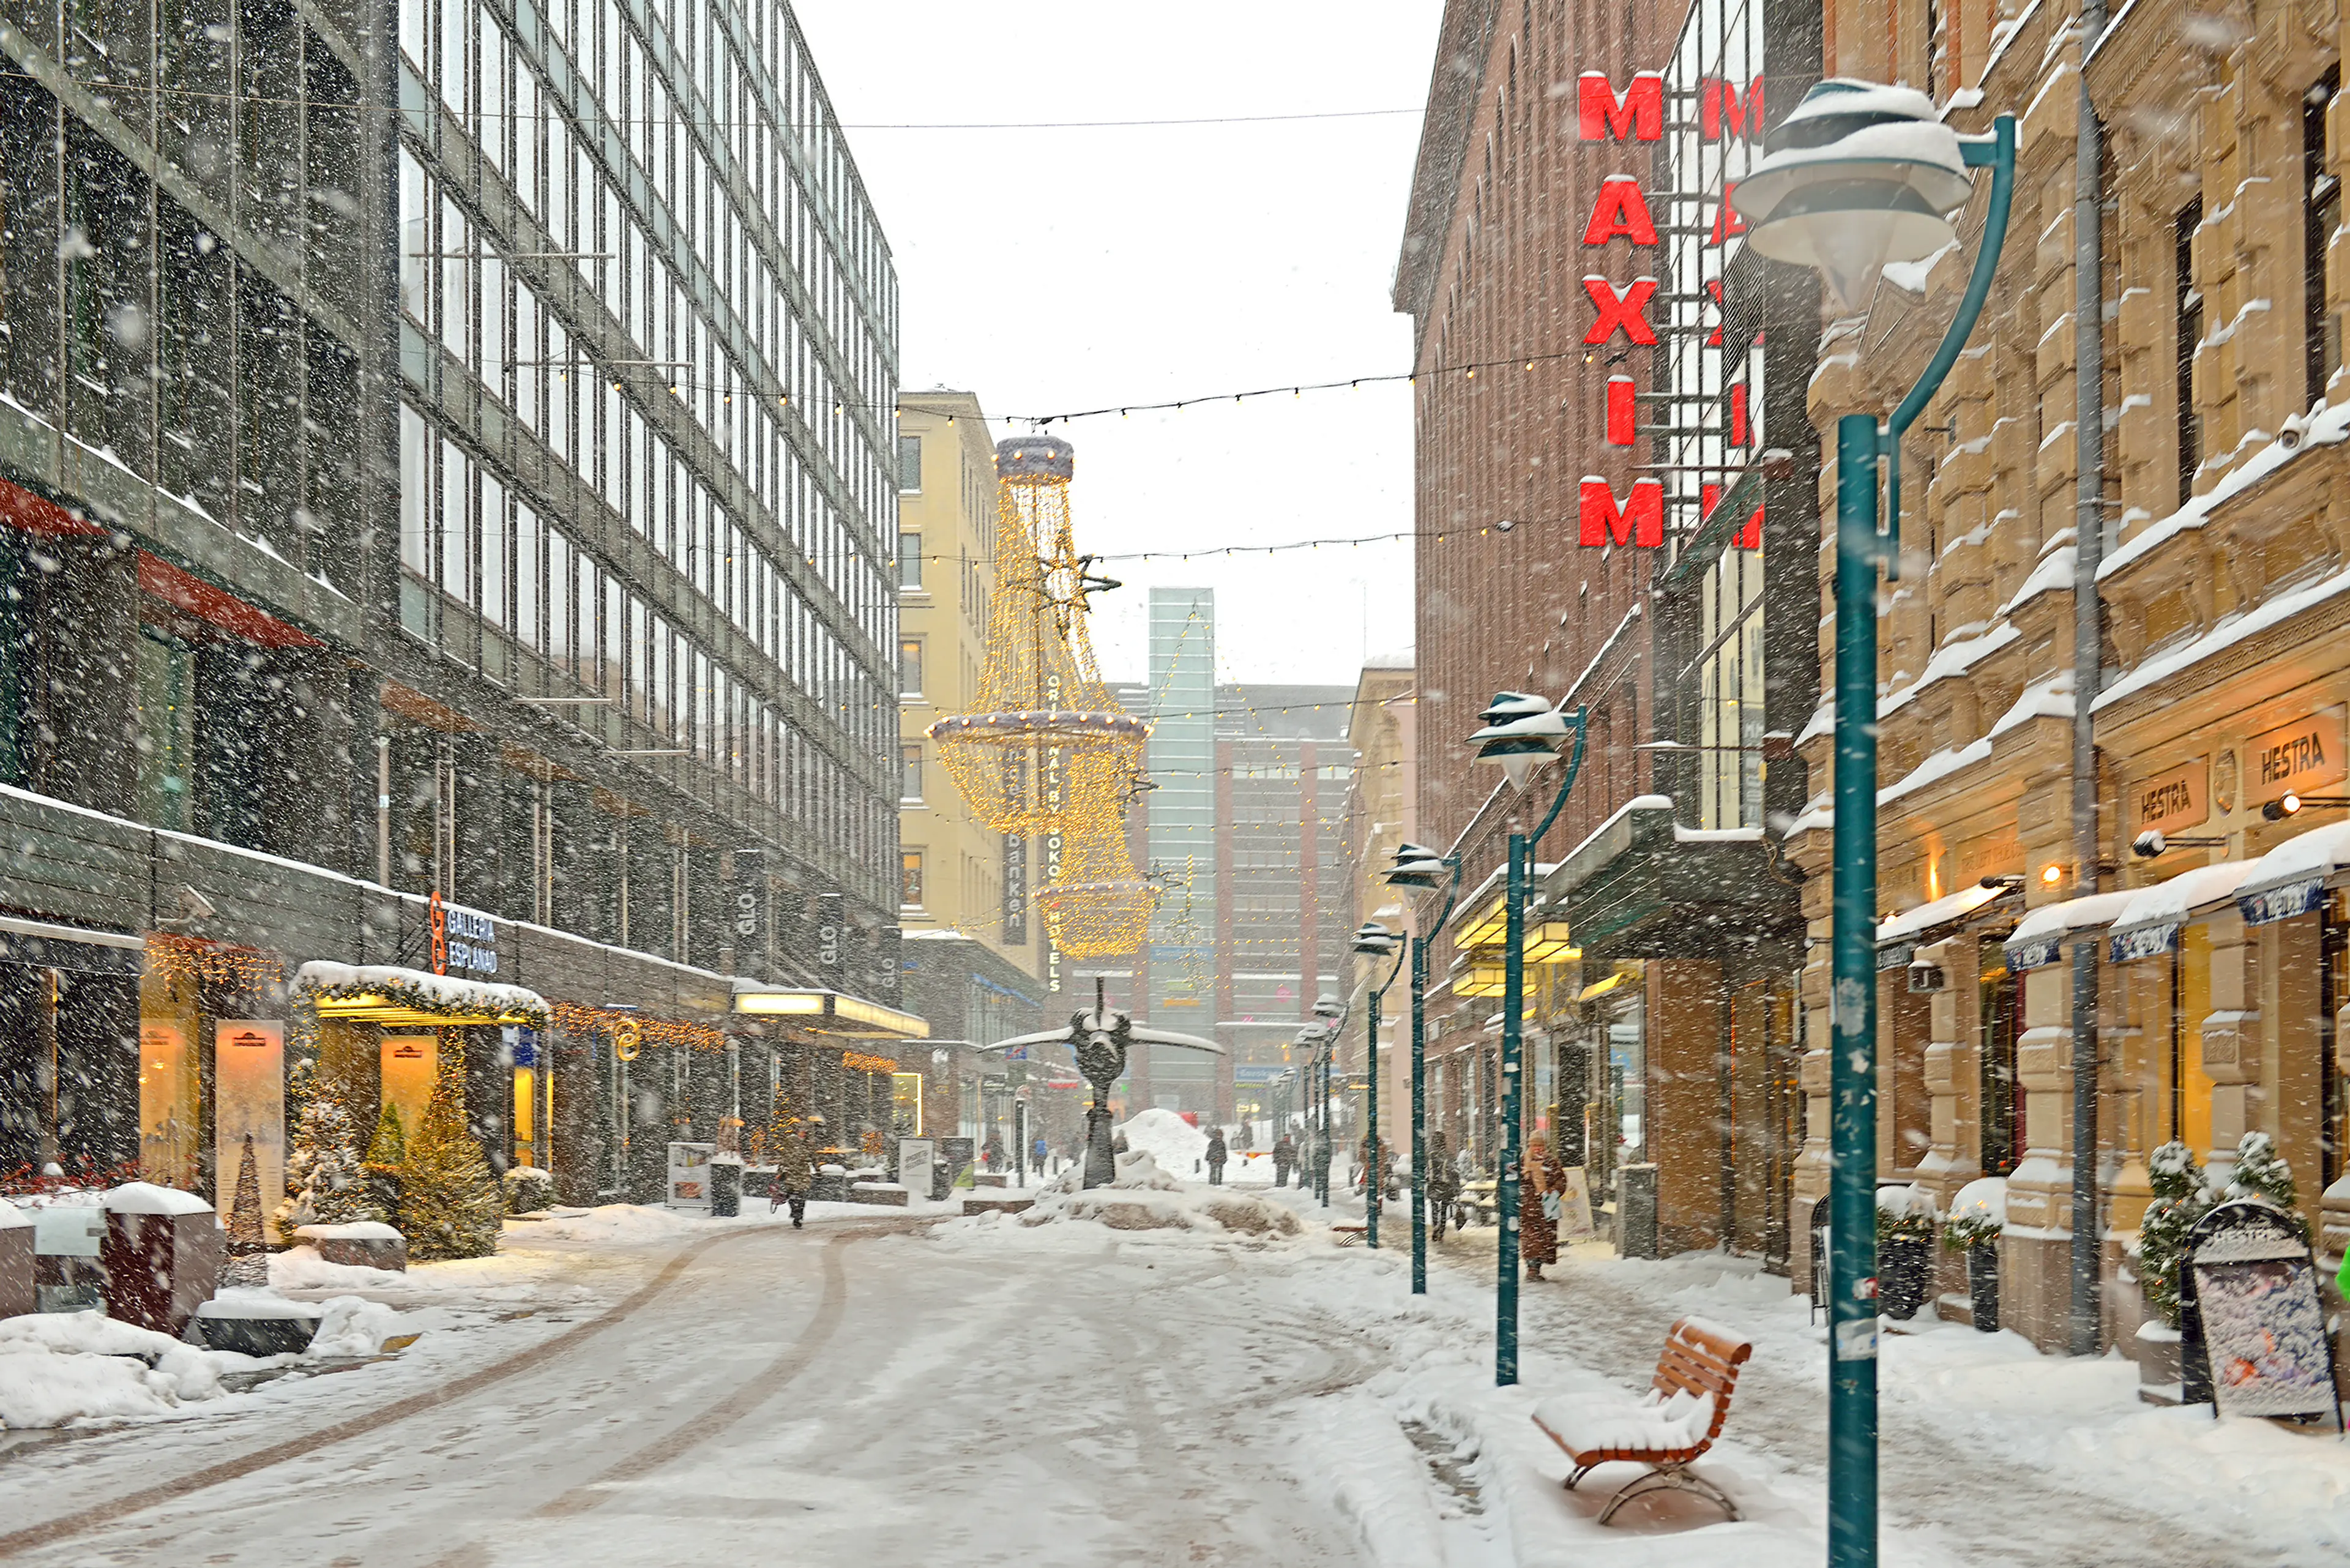 Snowfall and blizzard in Helsinki